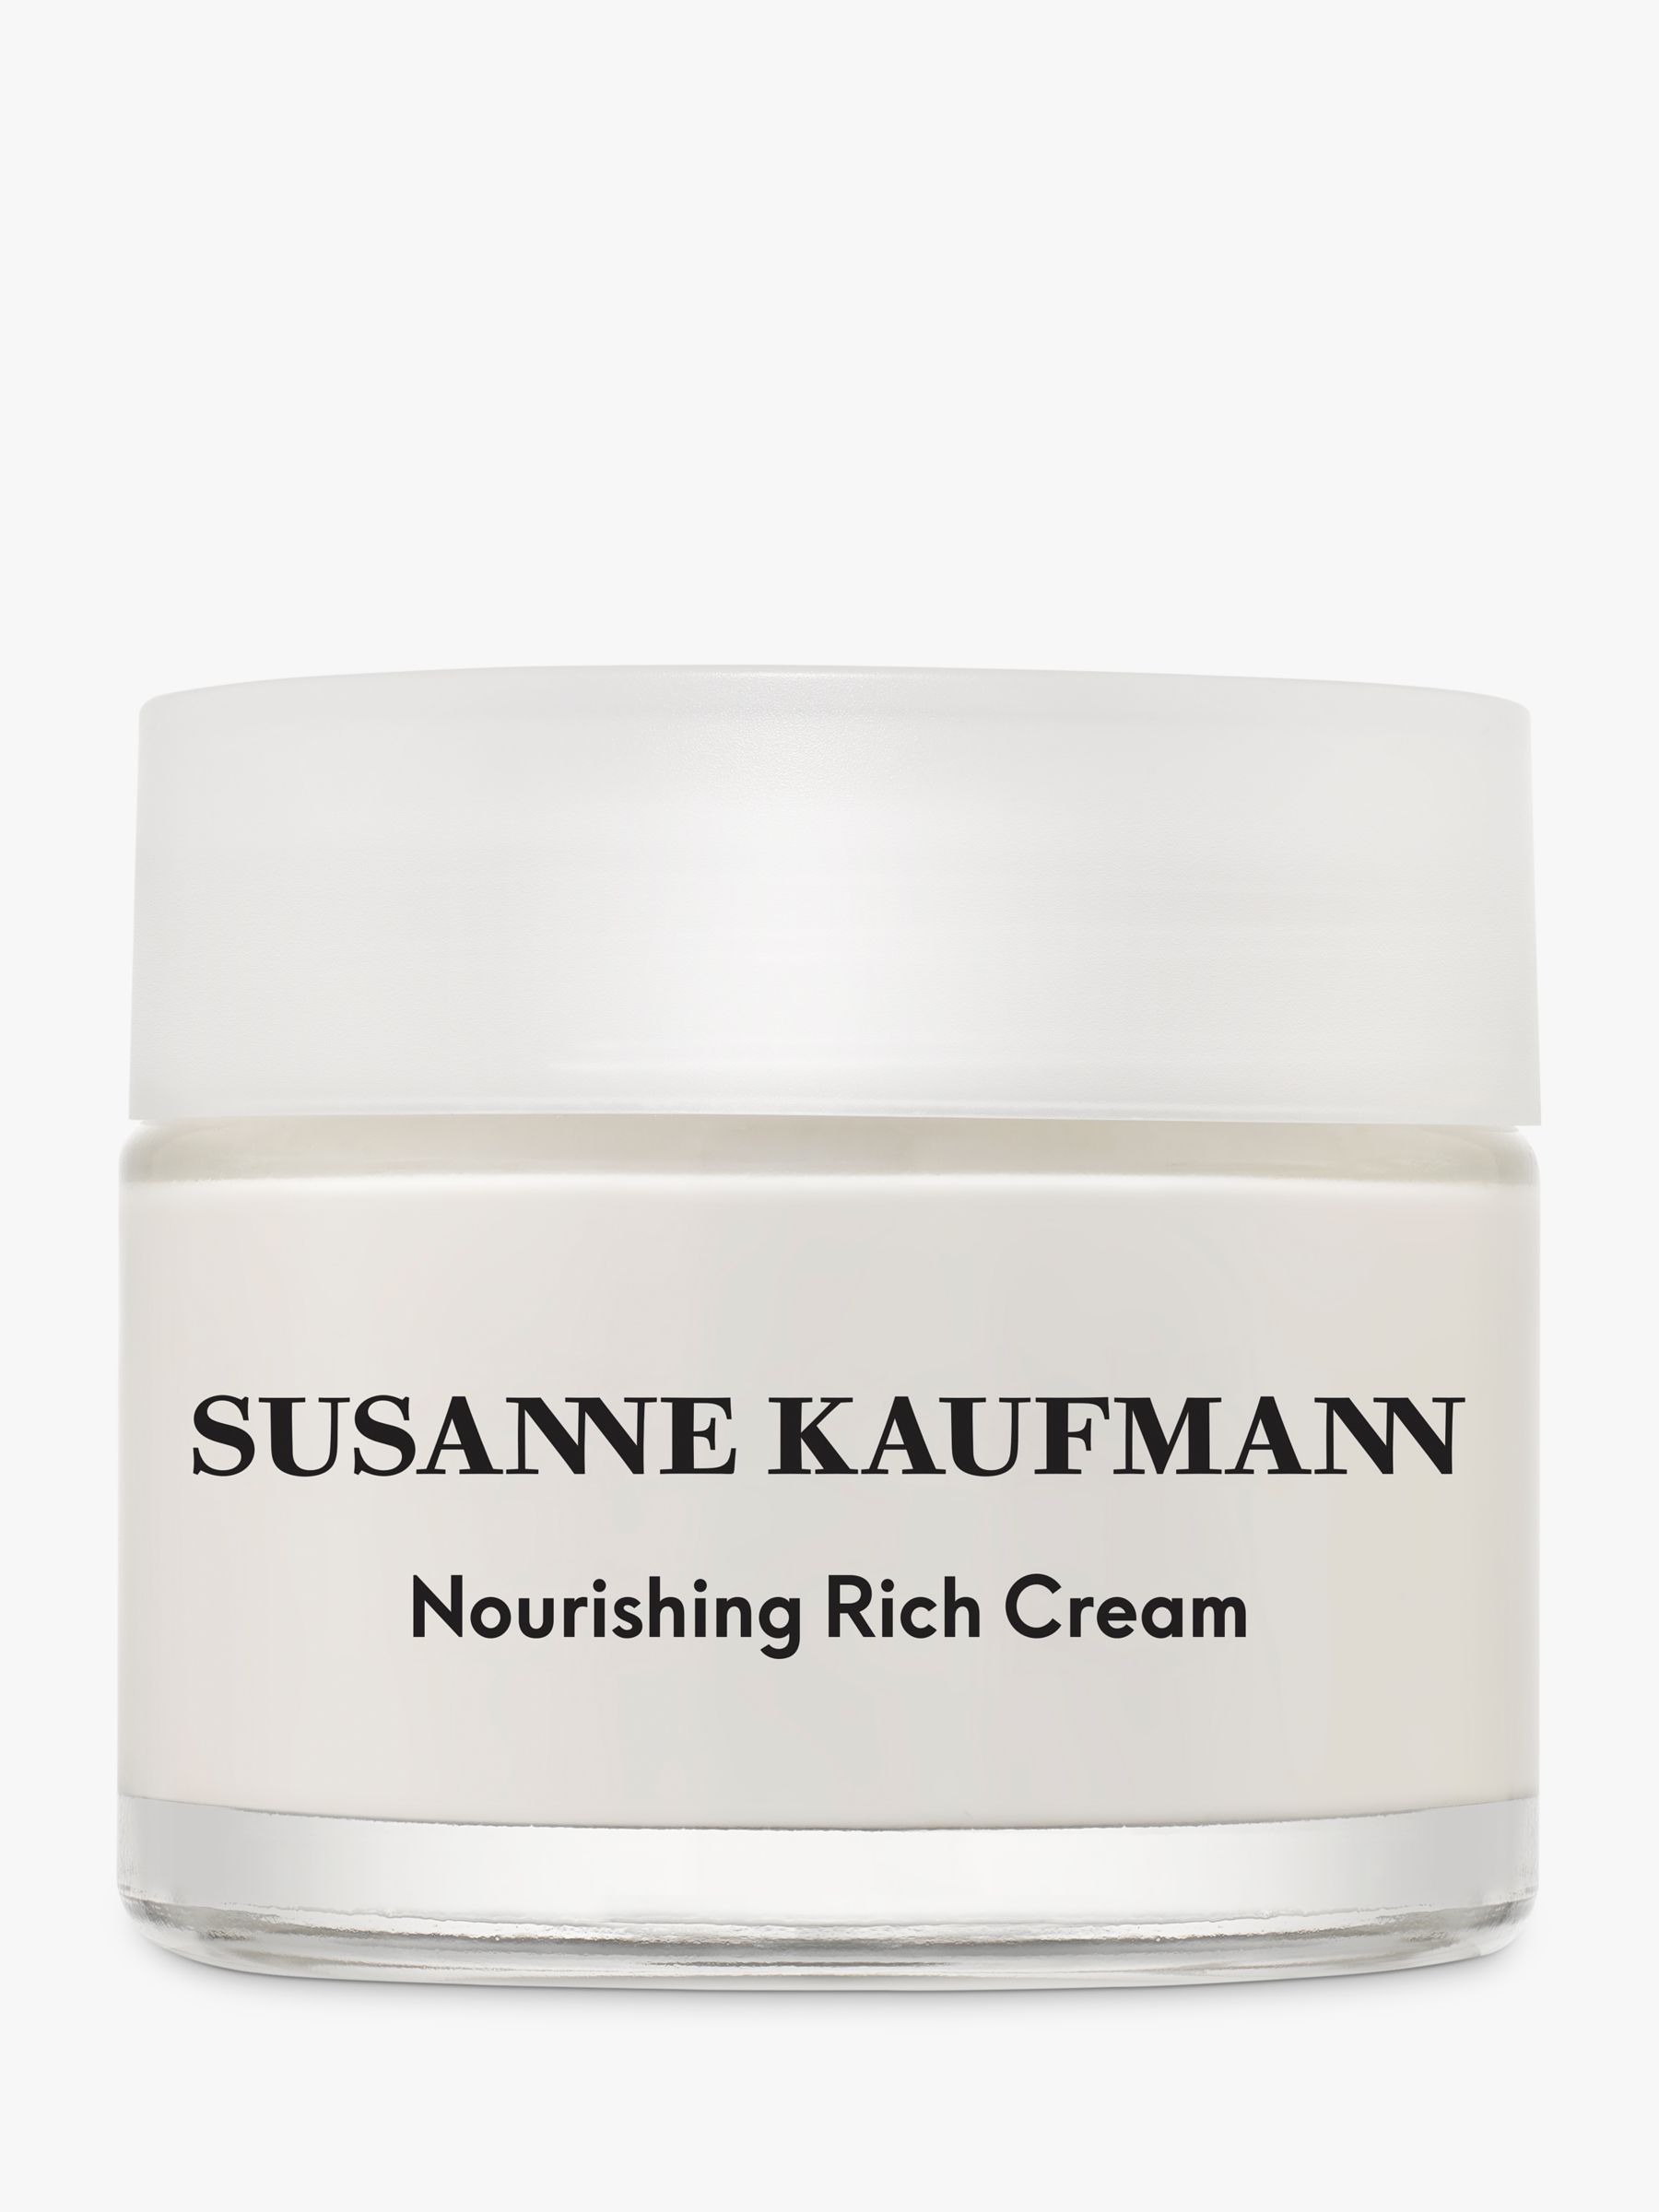 Susanne Kaufmann Nourishing Rich Cream, 50ml 1